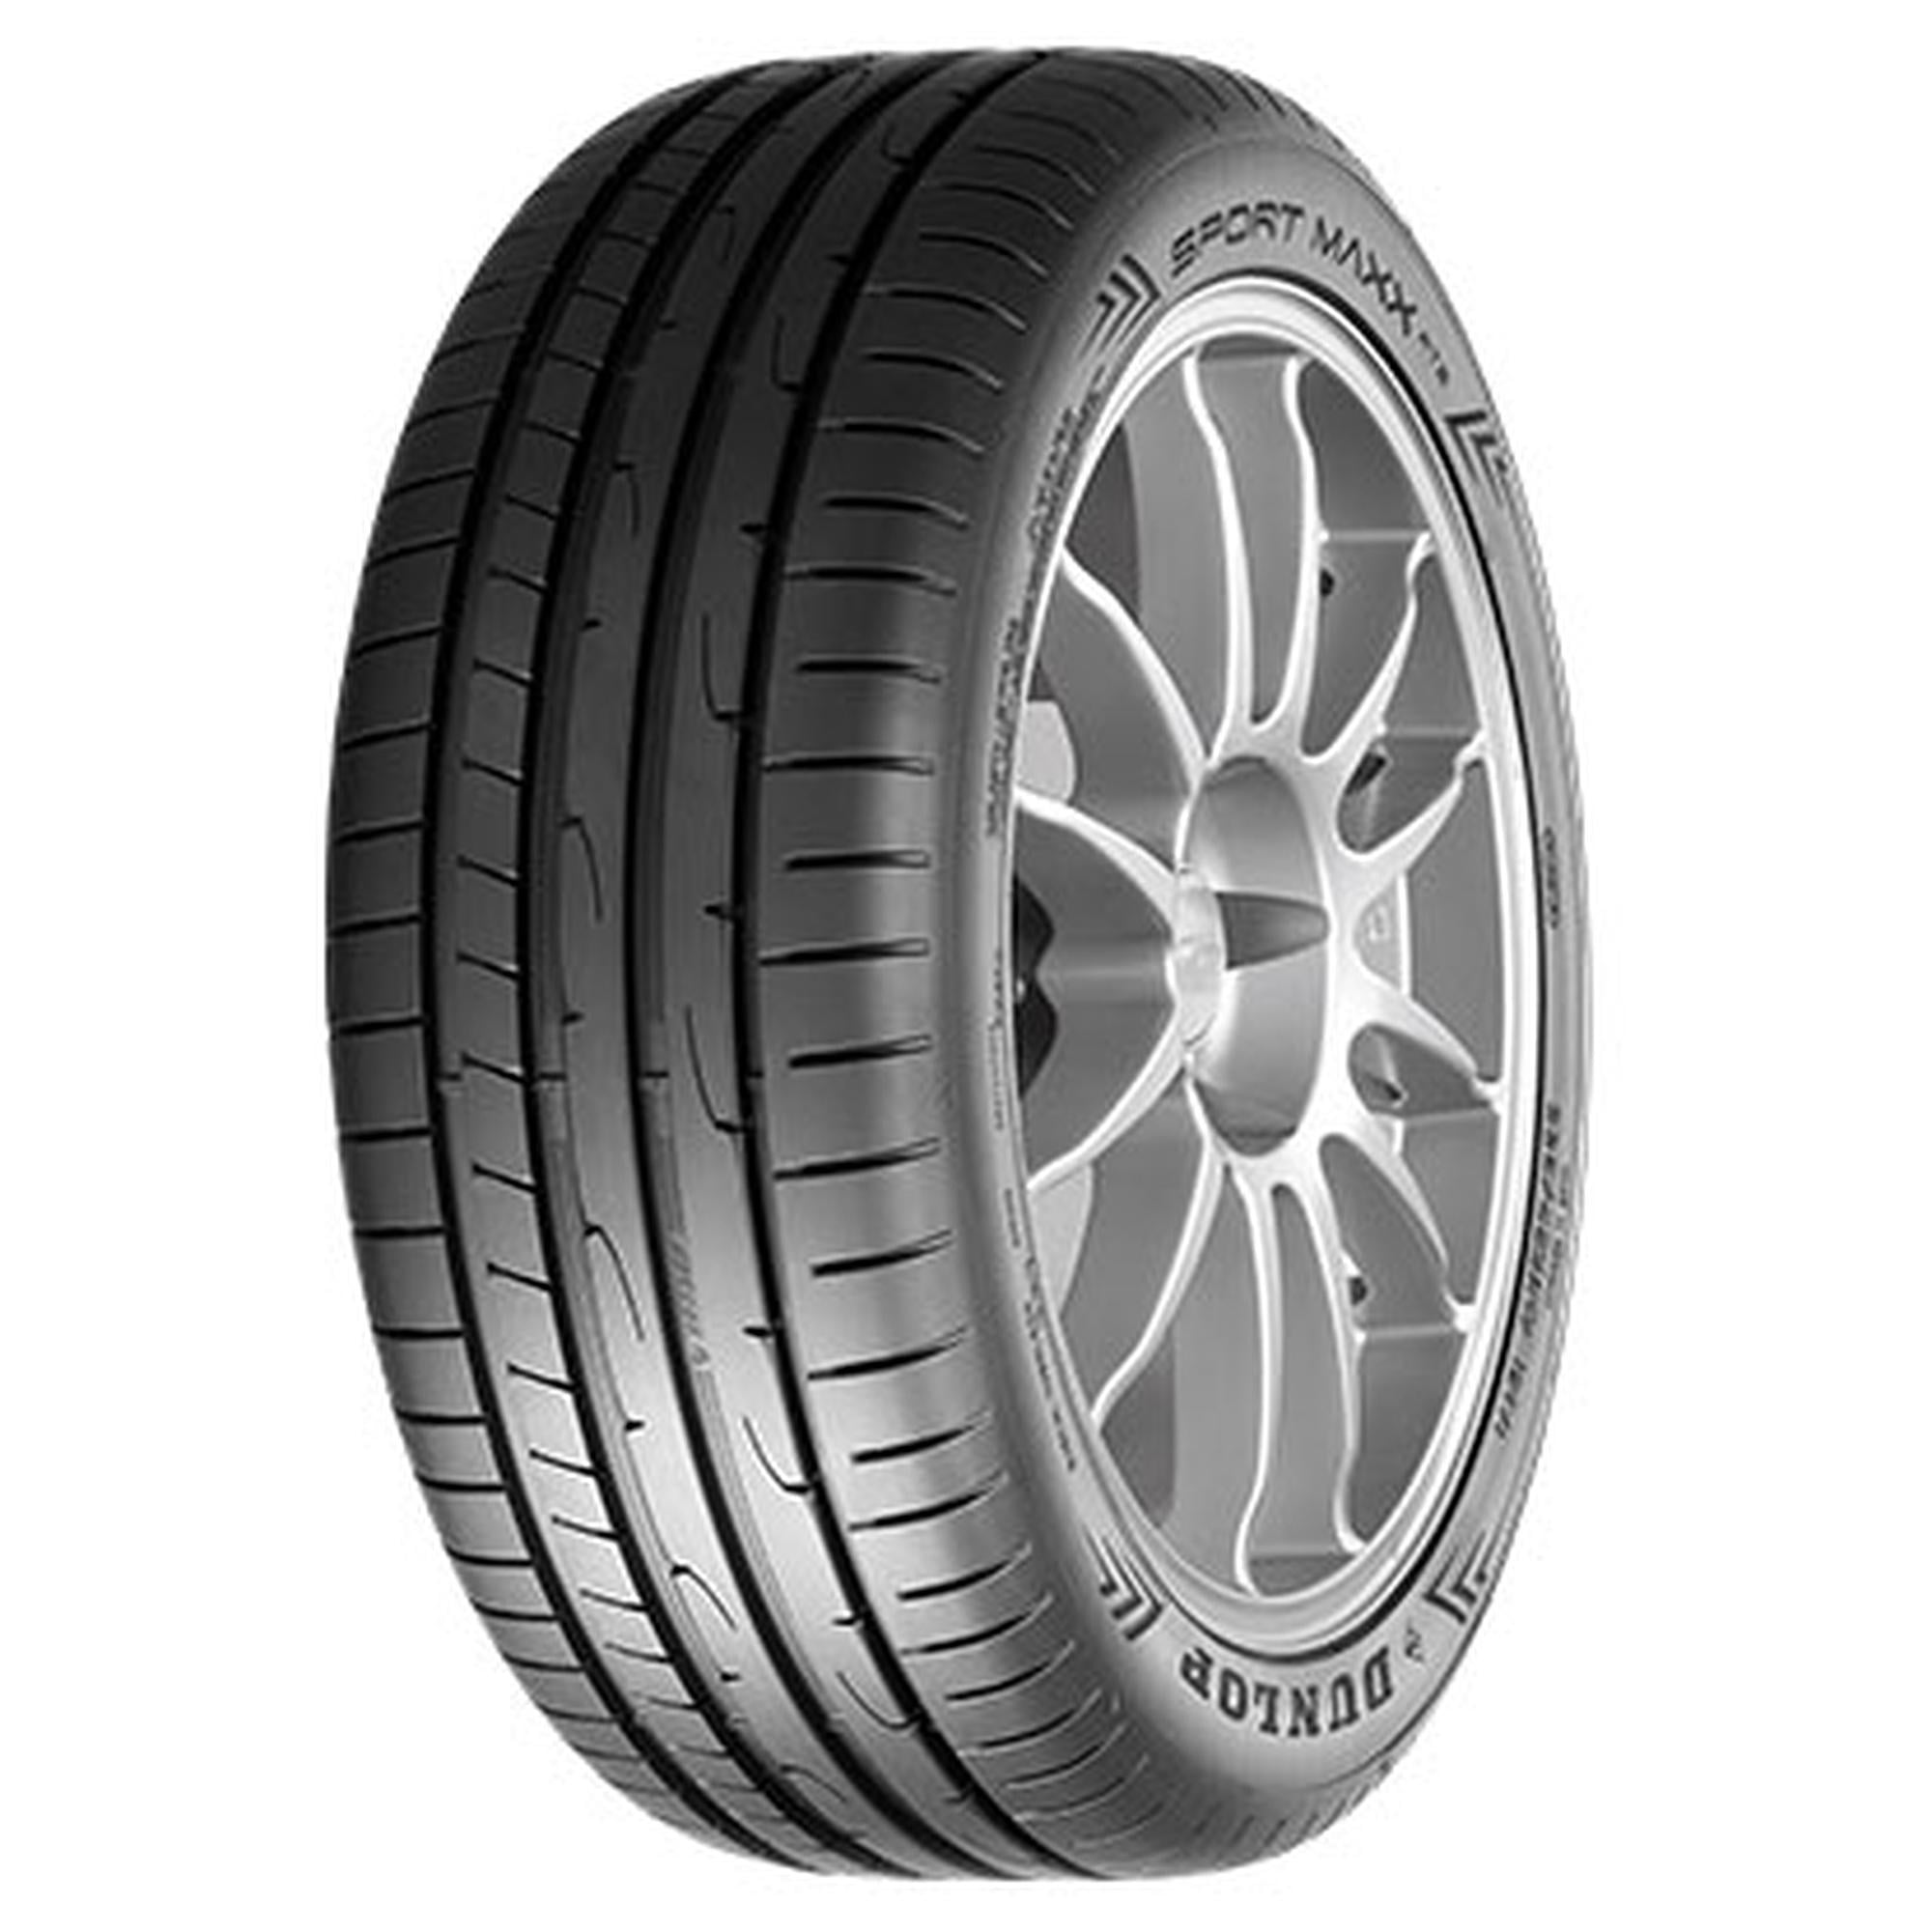 255/35ZR18 Base, Sport V Fits: Performance Tire 94Y 2016-19 ATS 2011 Rt2 BMW Cadillac Dunlop 328i Maxx